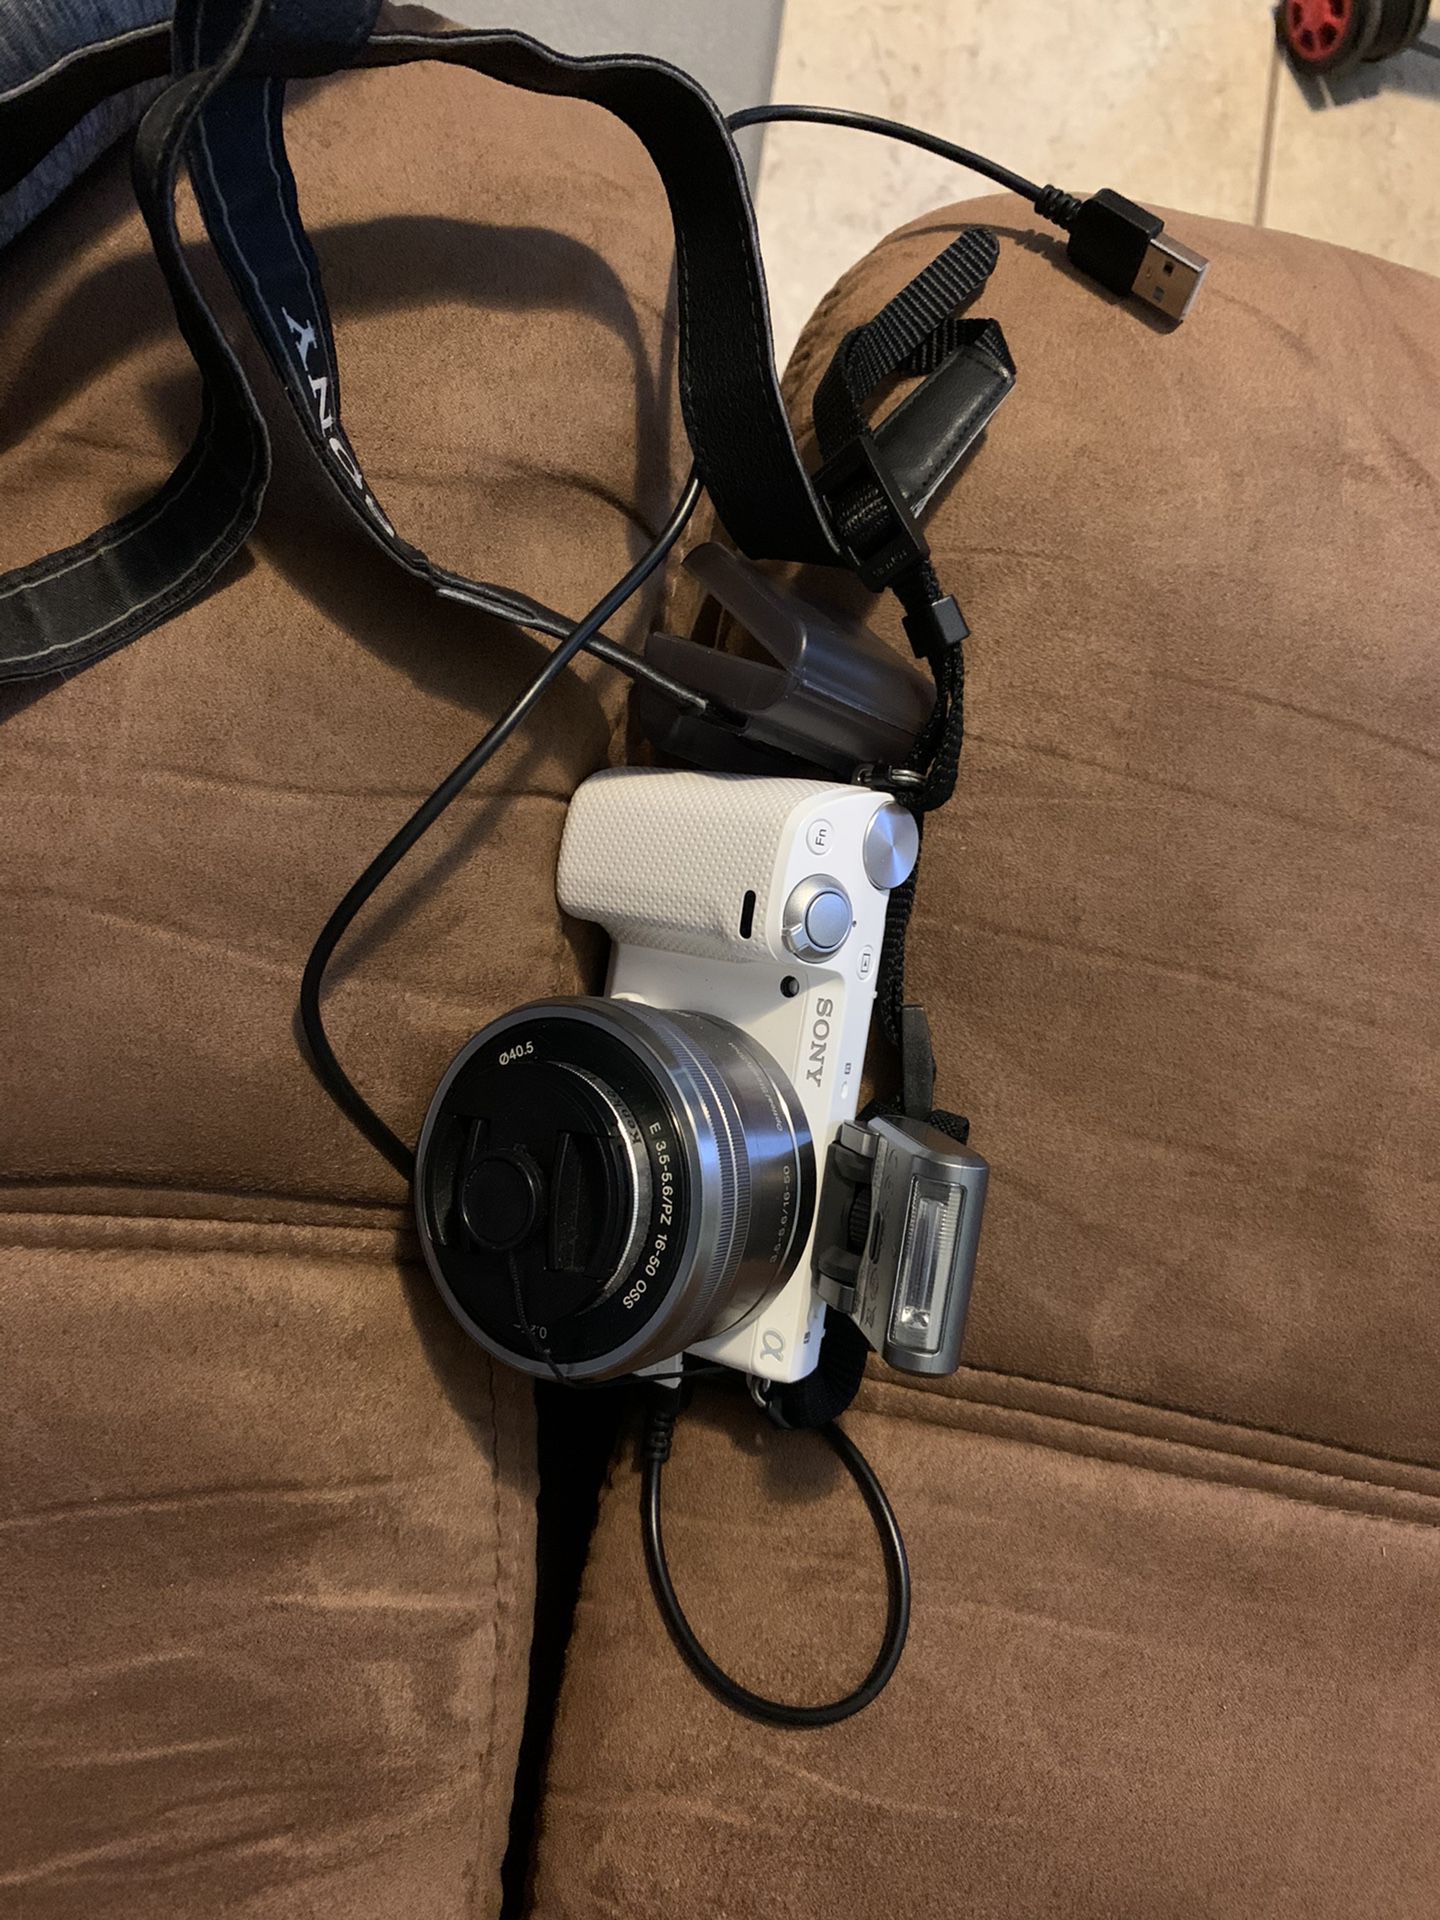 Sony NEX-5R digital camera